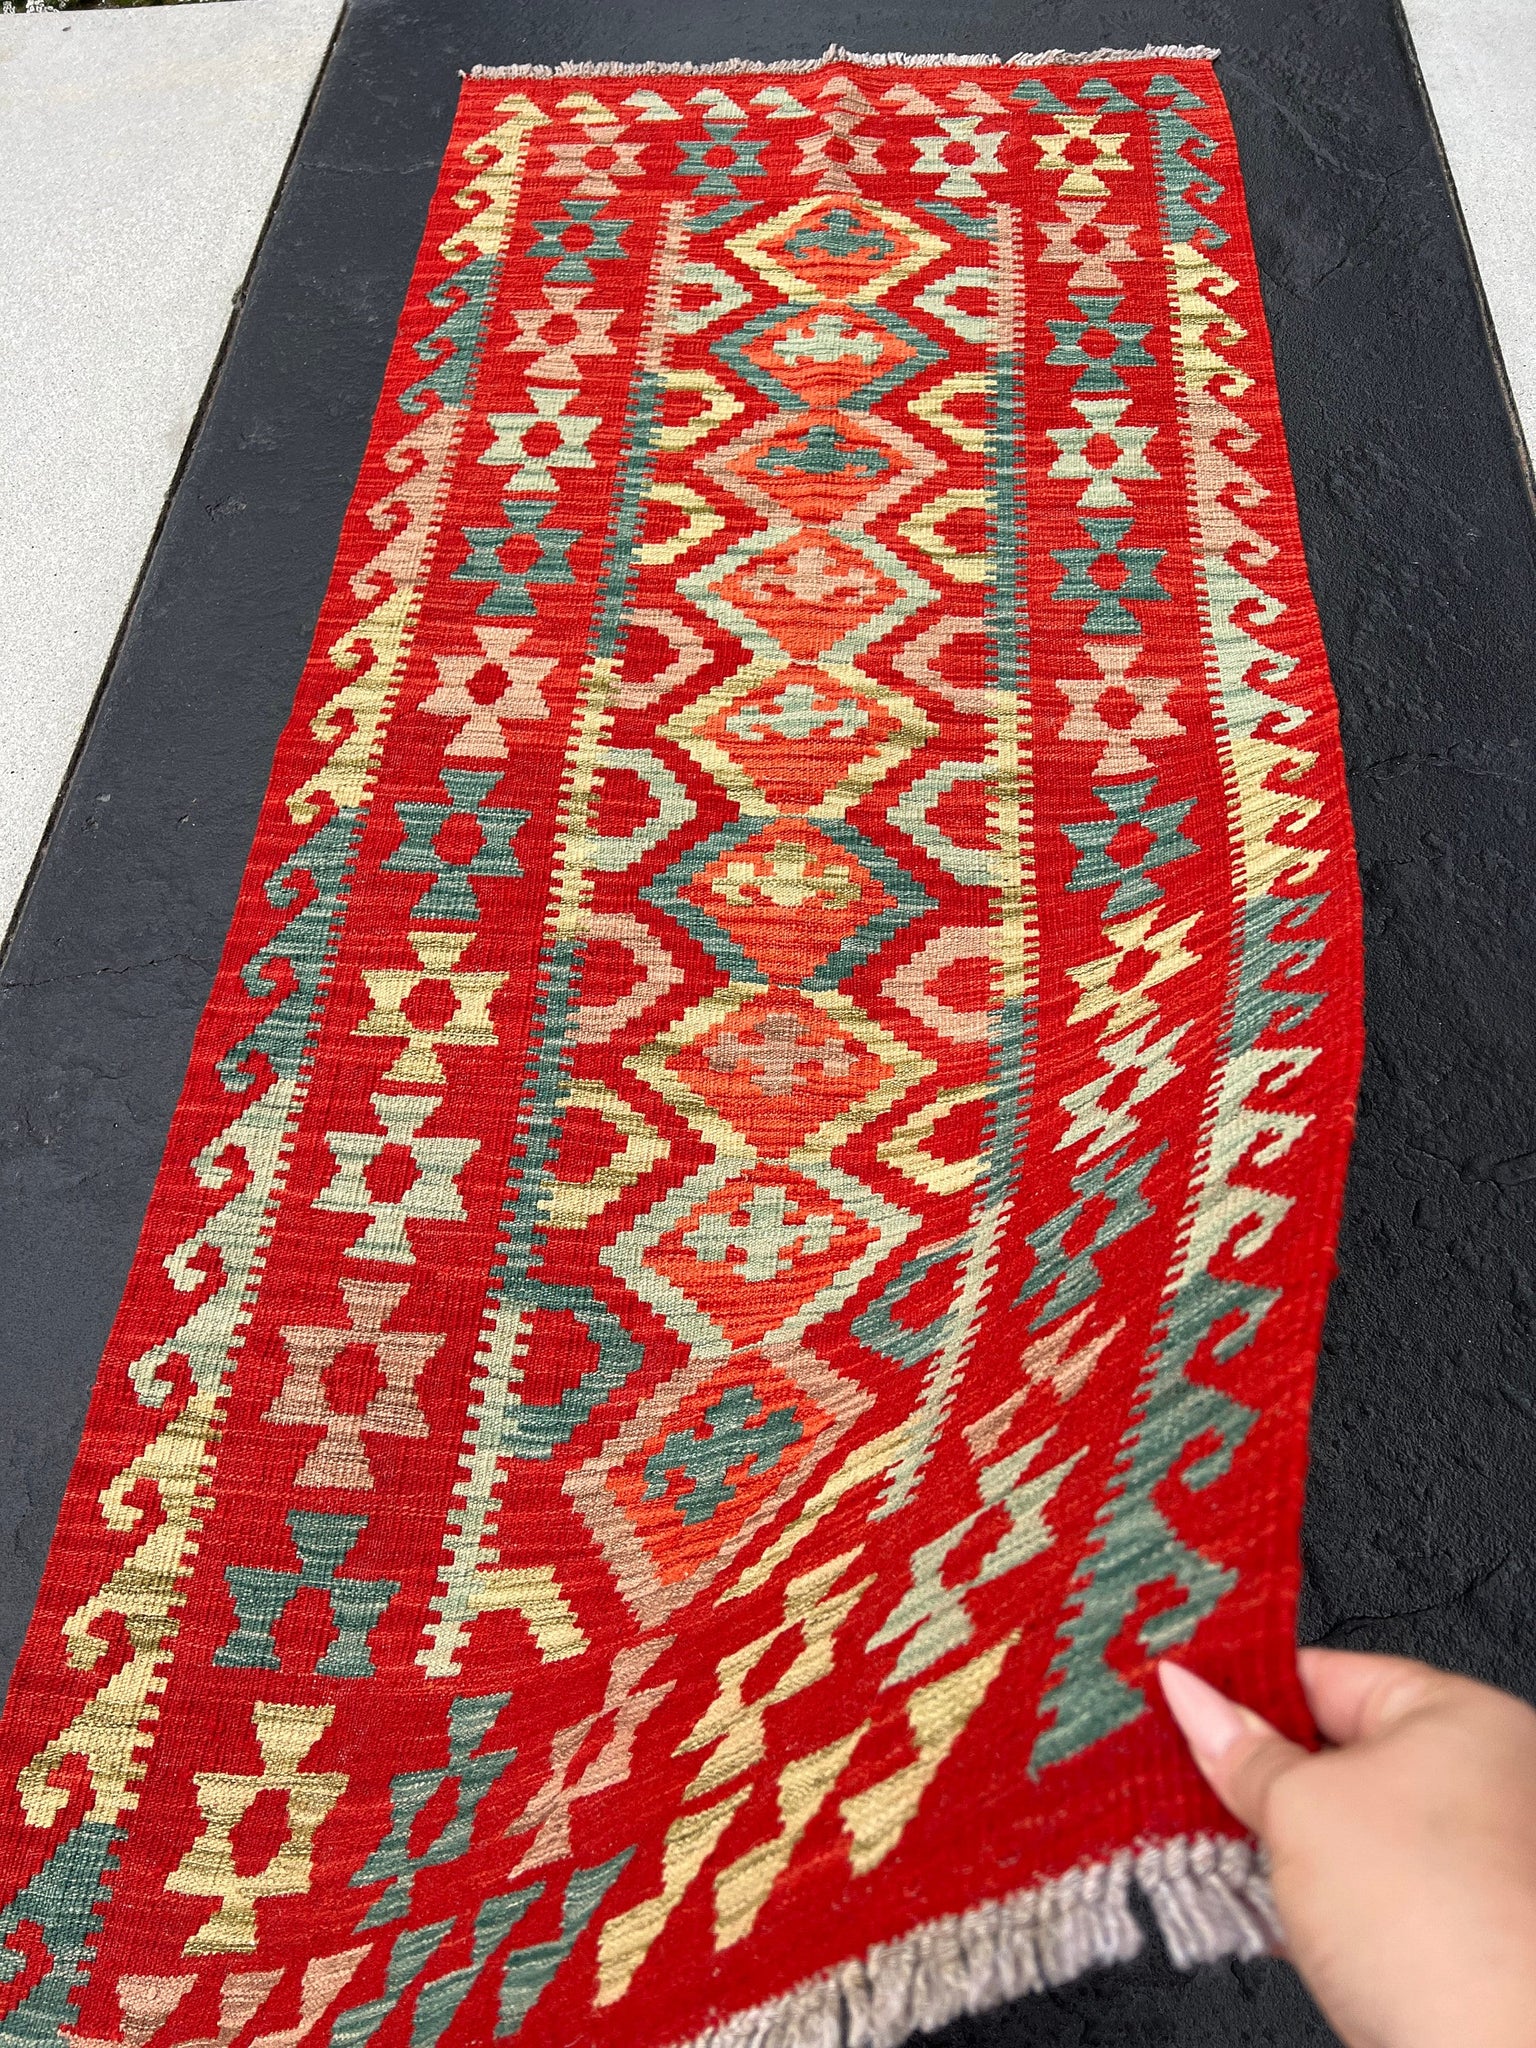 3x7 (91x213) Handmade Afghan Kilim Runner Rug | Crimson Blood Red Maroon Orange Forest Mint Green Cornsilk Yellow | Wool Outdoor Boho